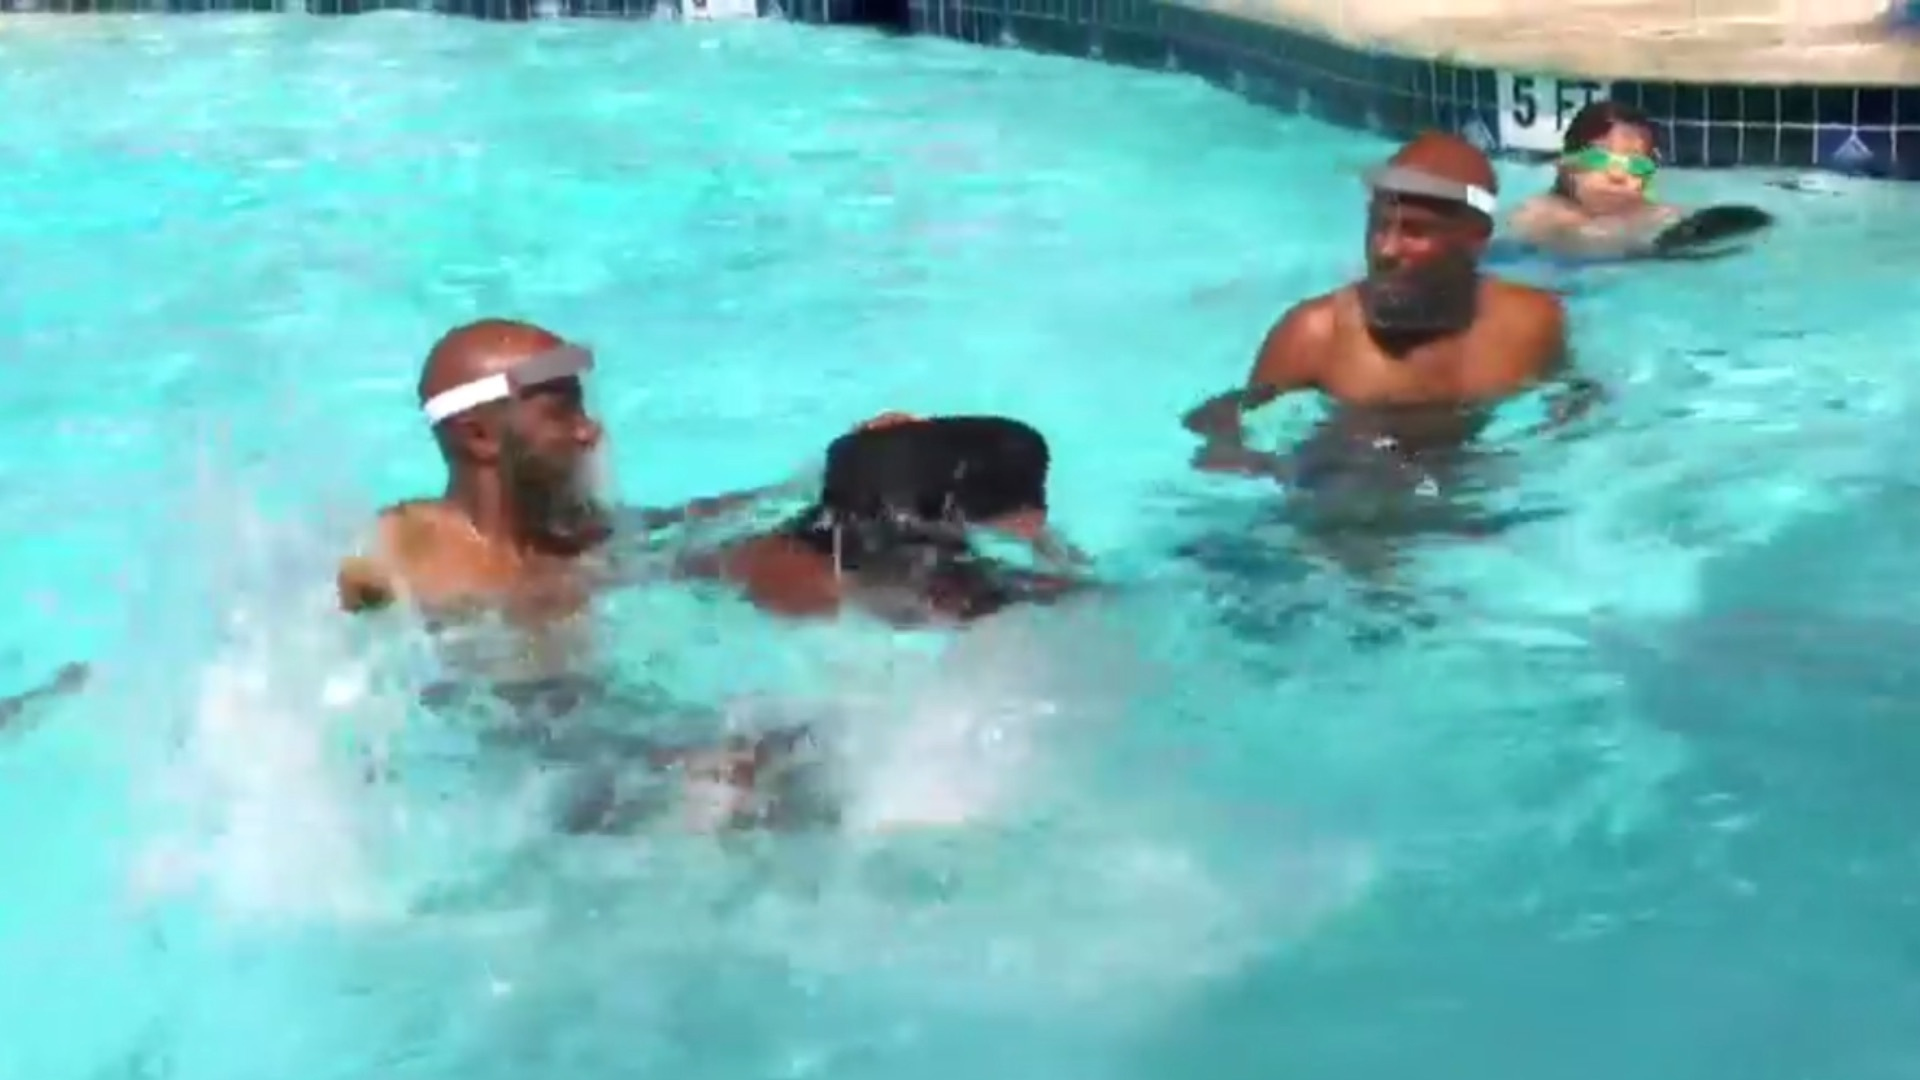 Watch CBS Evening News: Texas twins teach children how to swim with a  splash of confidence - Full show on CBS